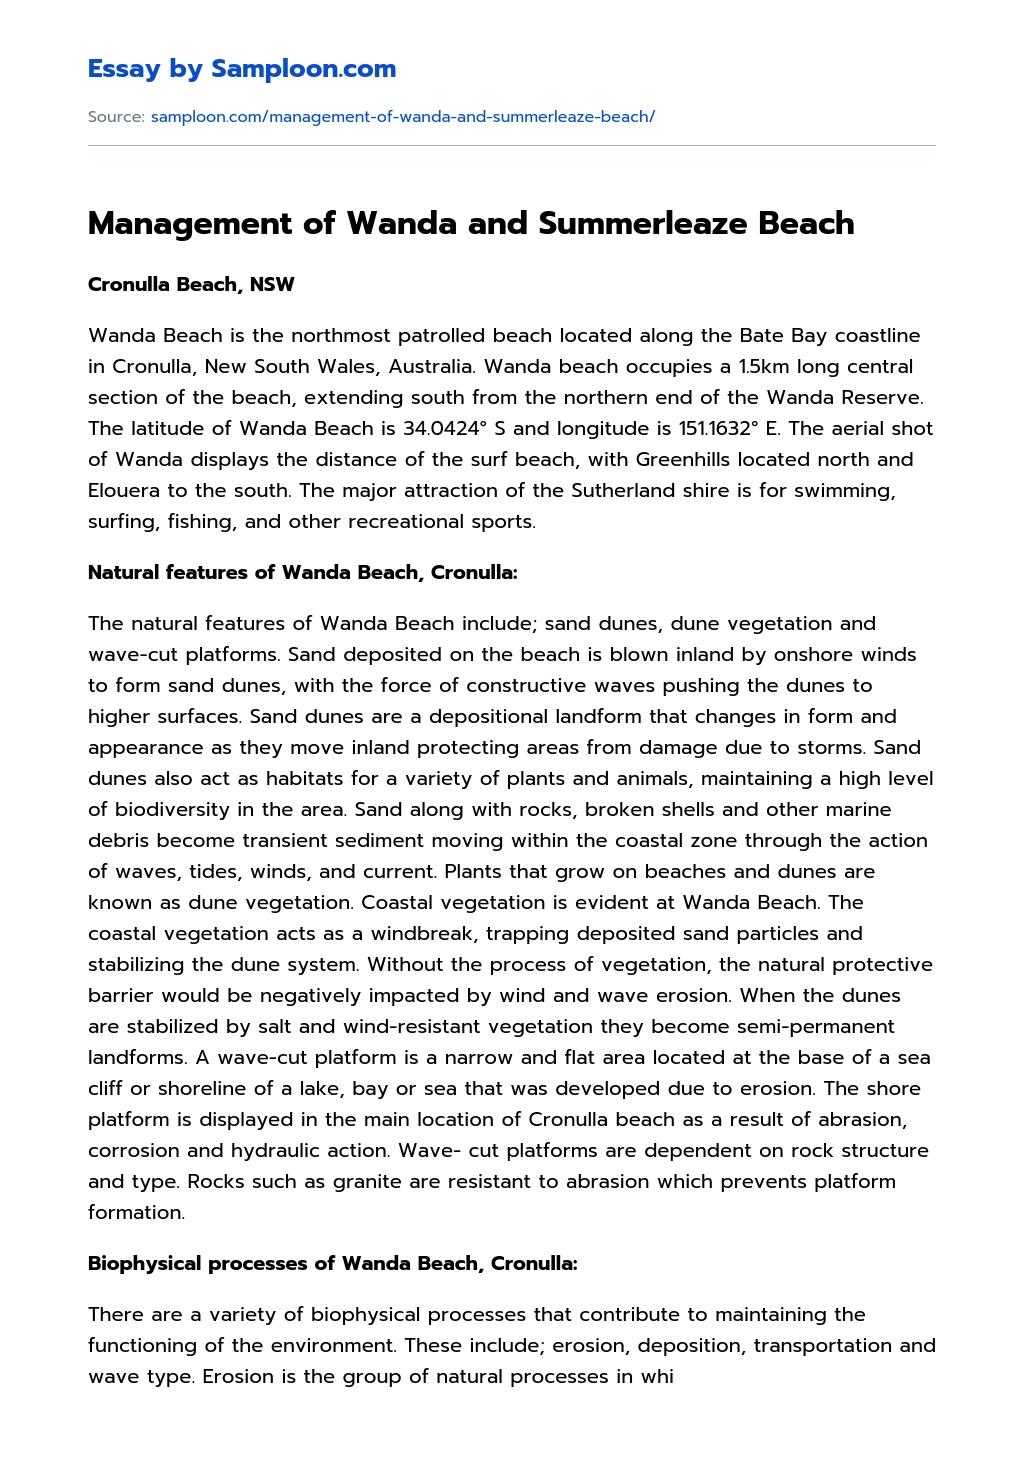 Management of Wanda and Summerleaze Beach Reflective Essay essay